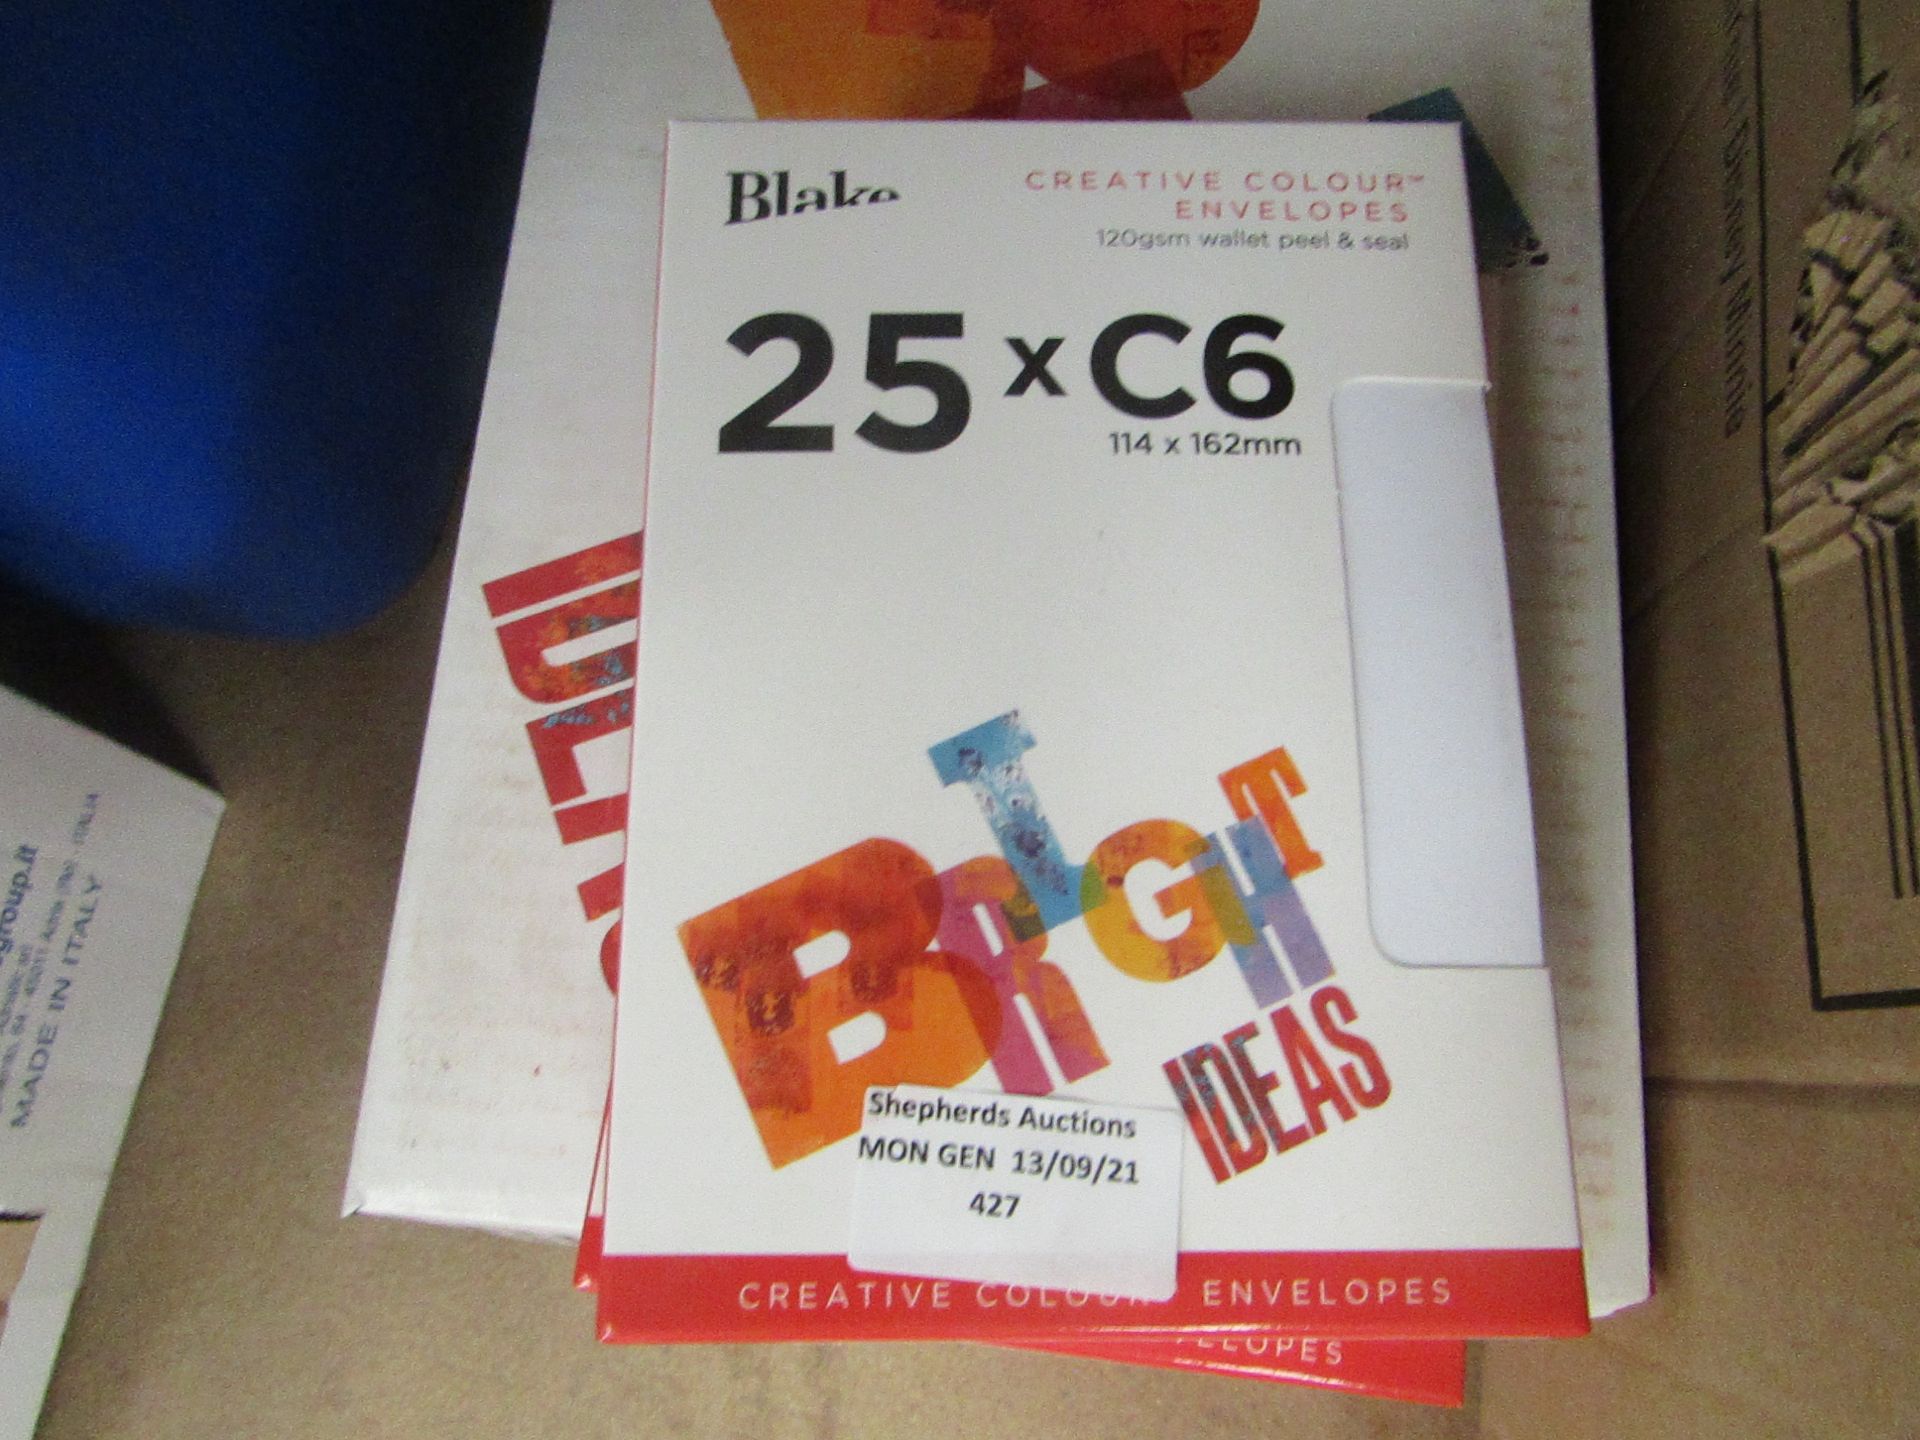 3x Packs of Blake Creative Colour Envelopes - 25 x C6 114x162mm - New & Sealed